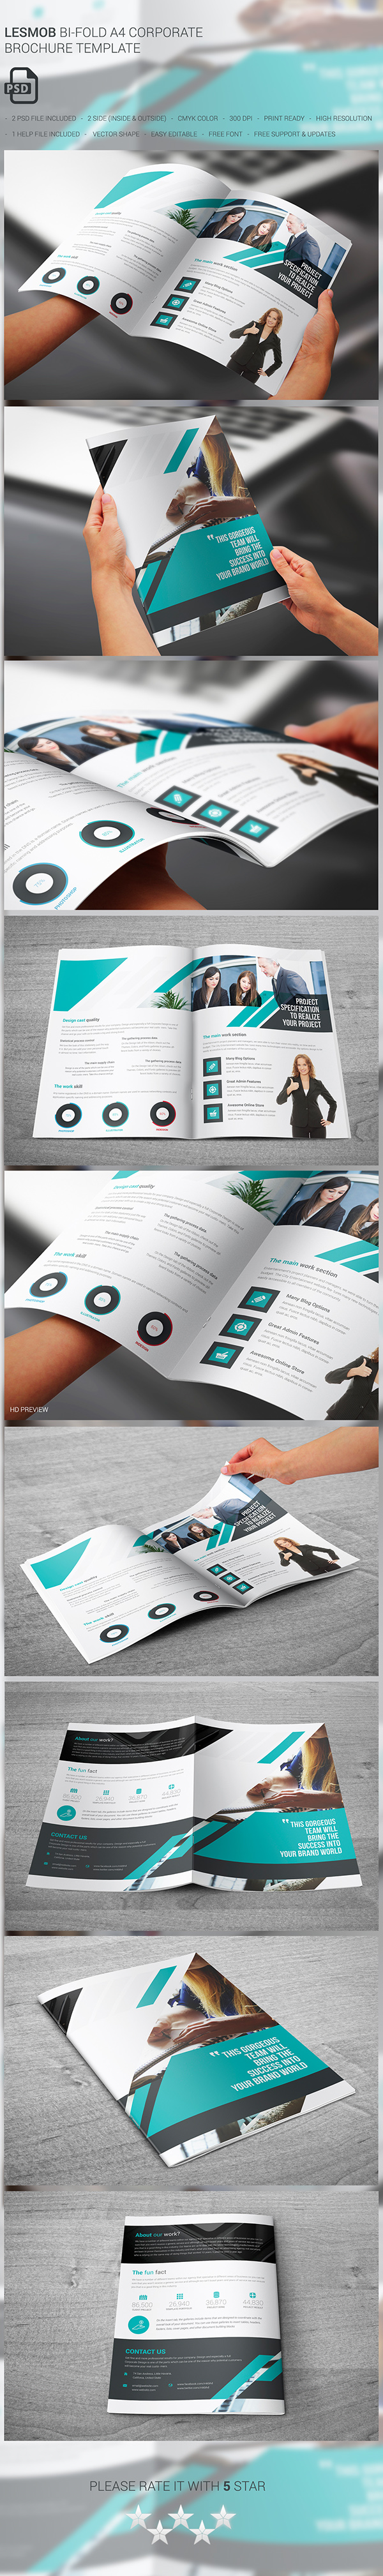 Lesmob Corporate Bi-fold Brochure